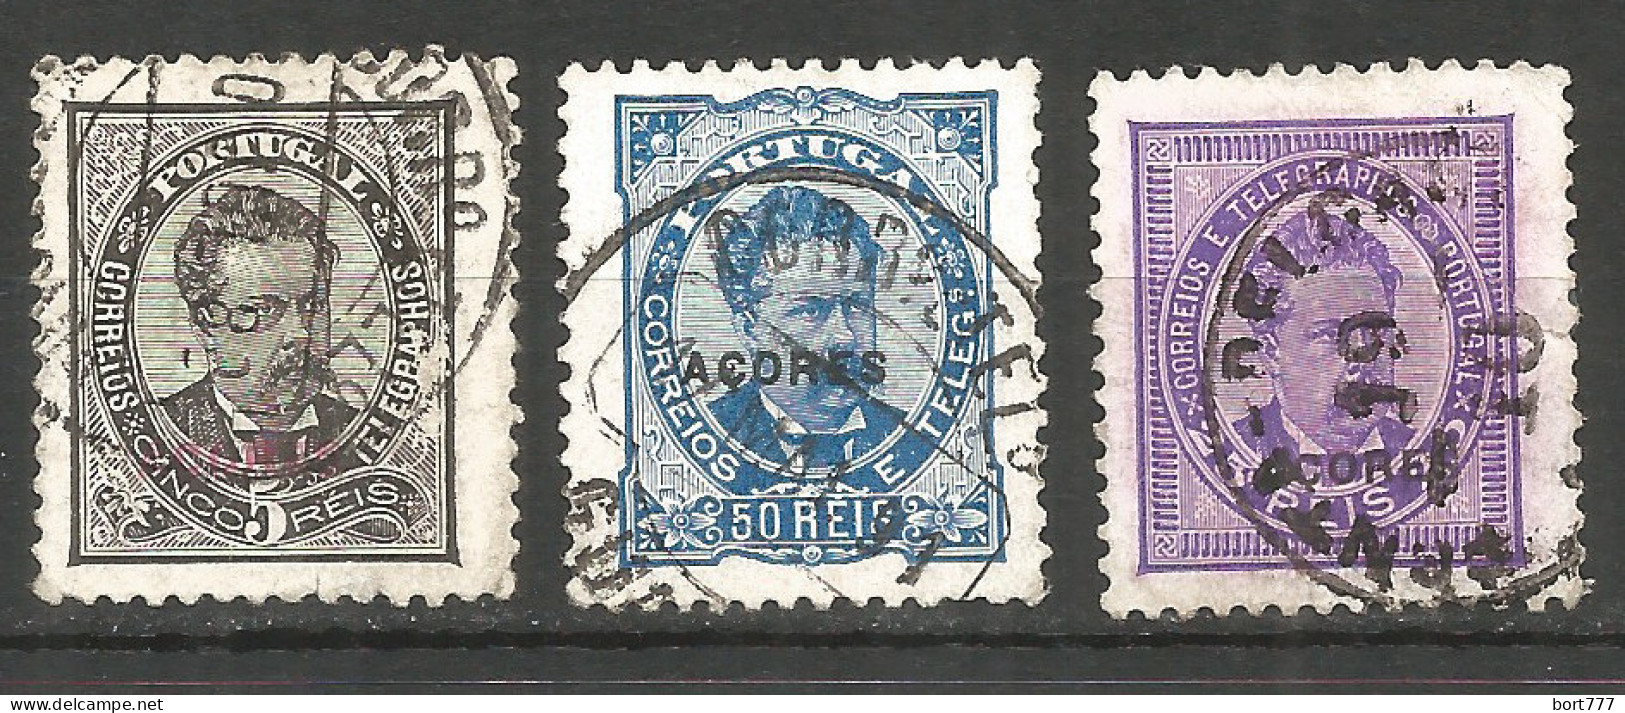 Portugal Azores 1882 Used Stamps Set  - Usado